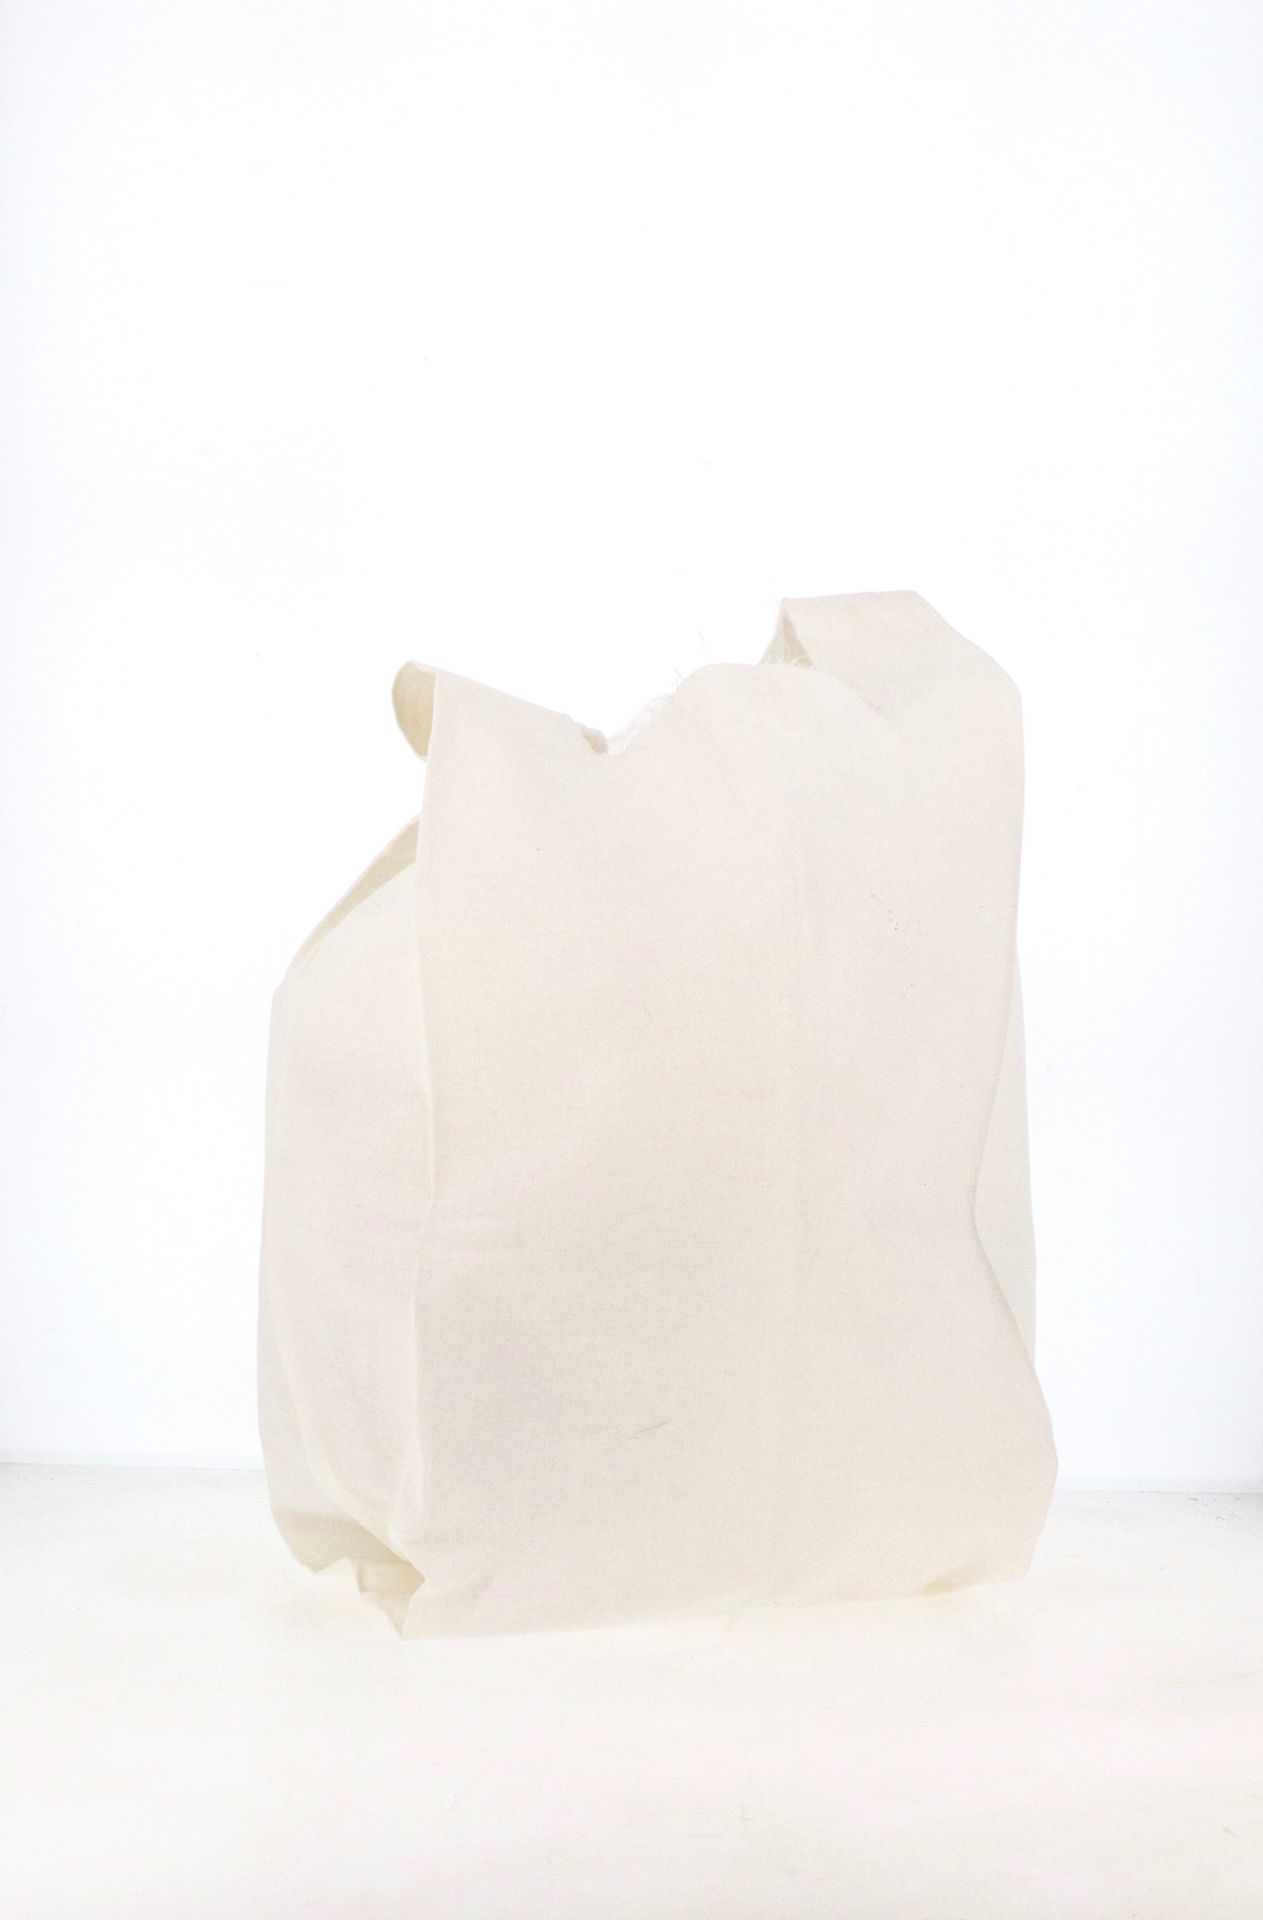 MAISON MARTIN MARGIELA 购物袋

在白色的棉花中

约58 x 29厘米

没有标签，从未穿过，有一个小的黄色标记



图形学：保留权利